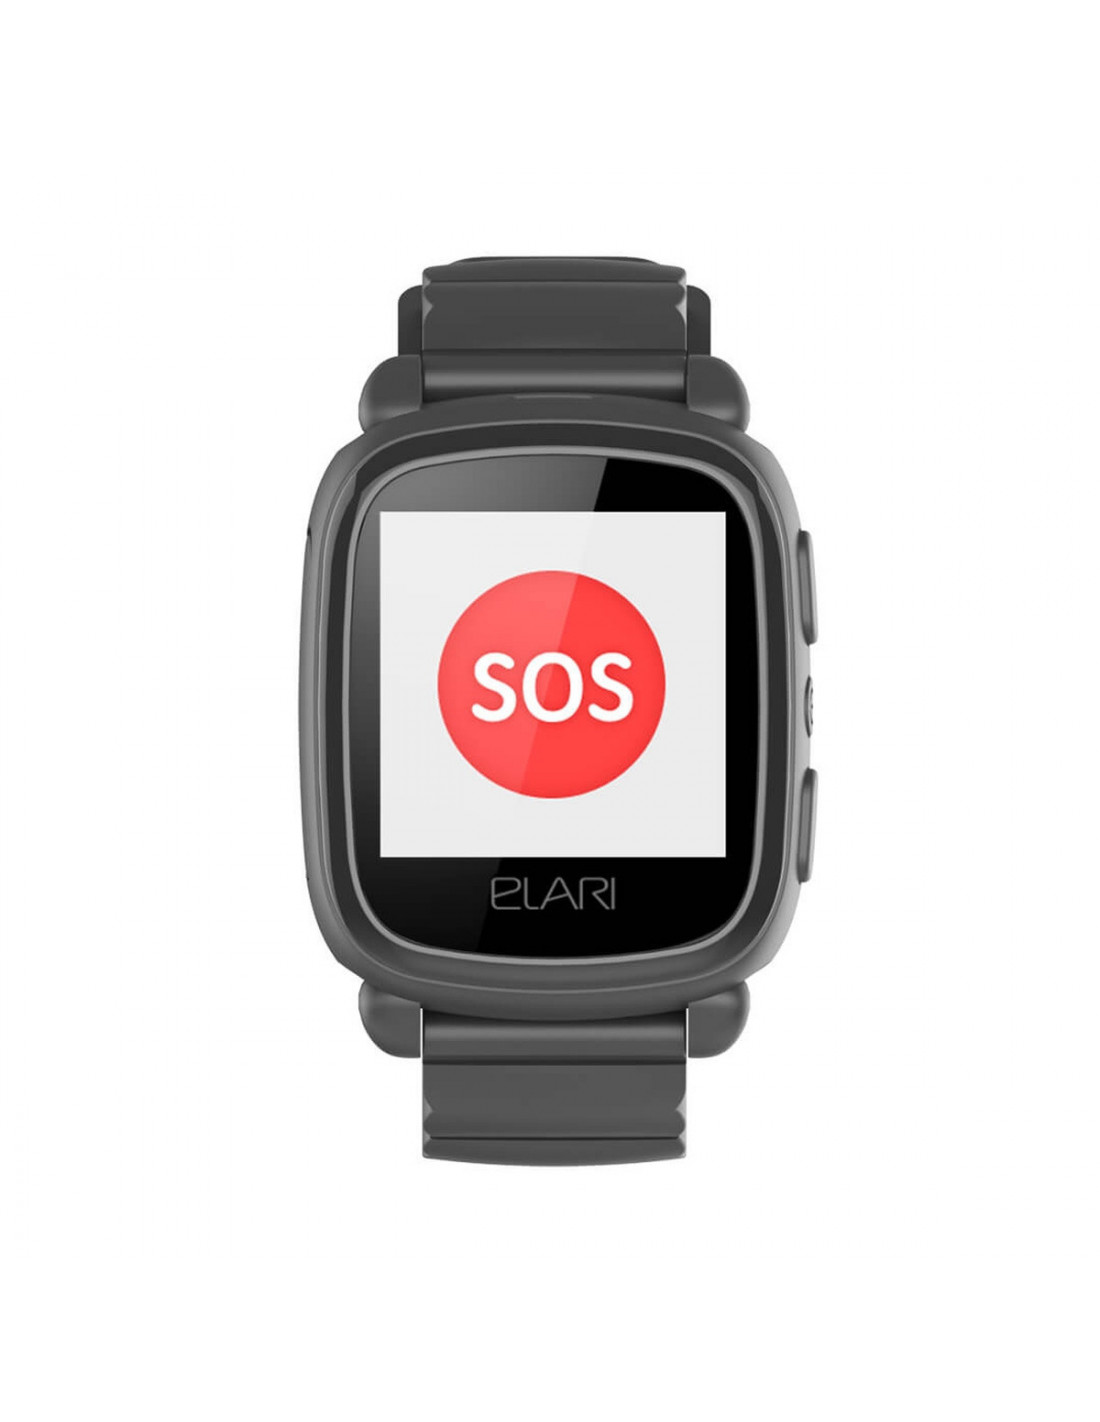 El Smartwatch GPS infantil que todo el mundo quiere: ELARI KidPhone 2 -  Barreu